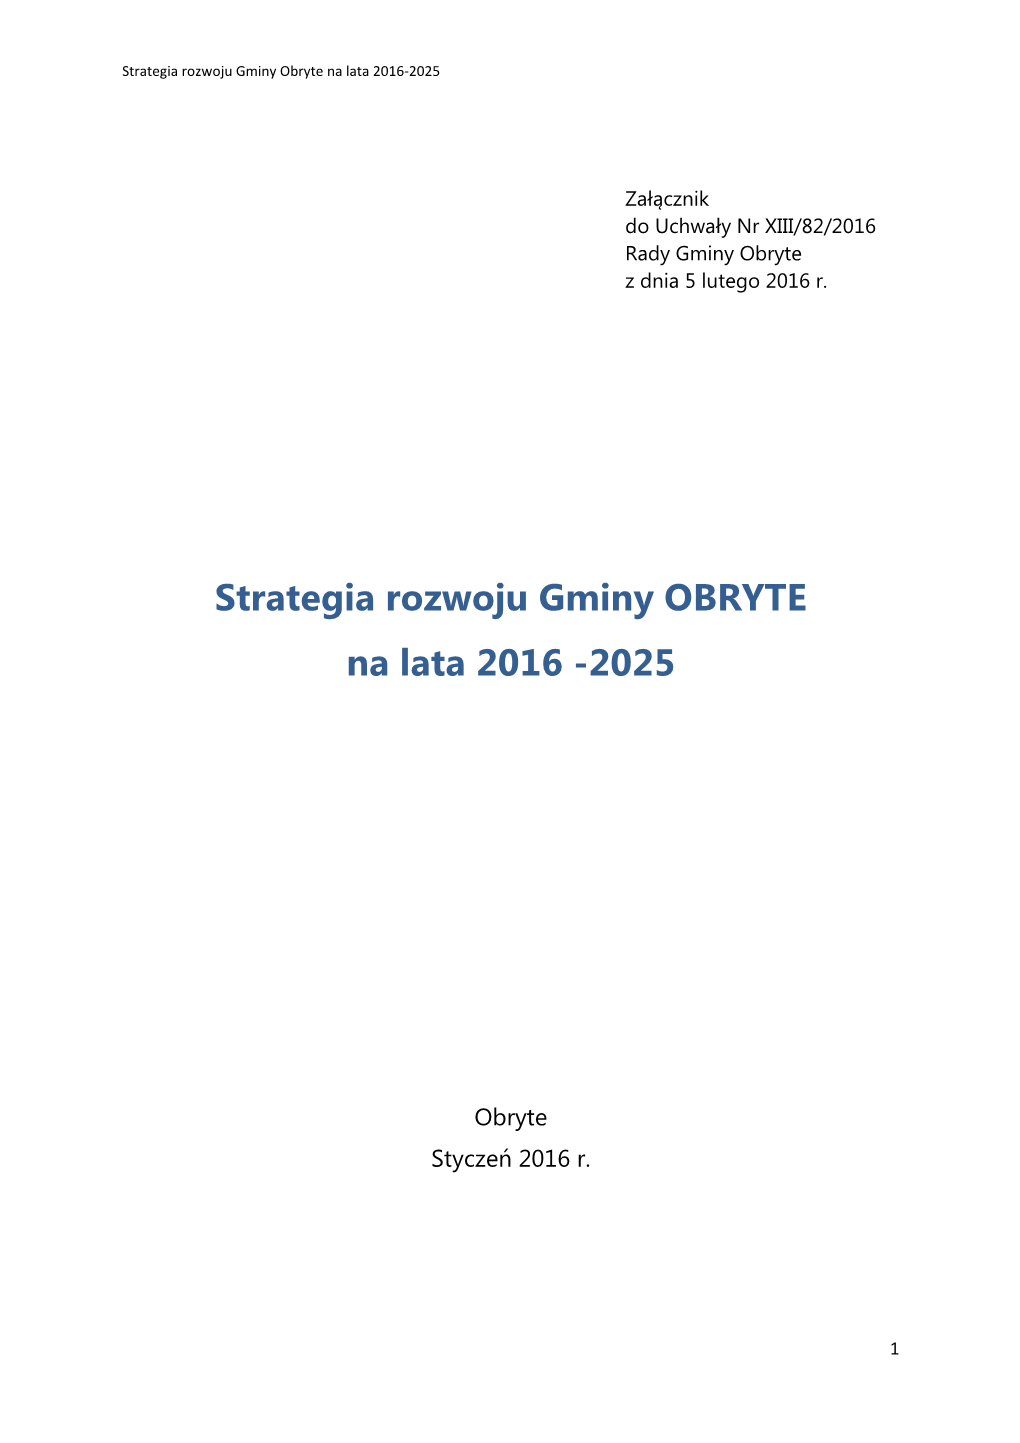 Strategia Rozwoju Gminy Obryte Na Lata 2016-2025